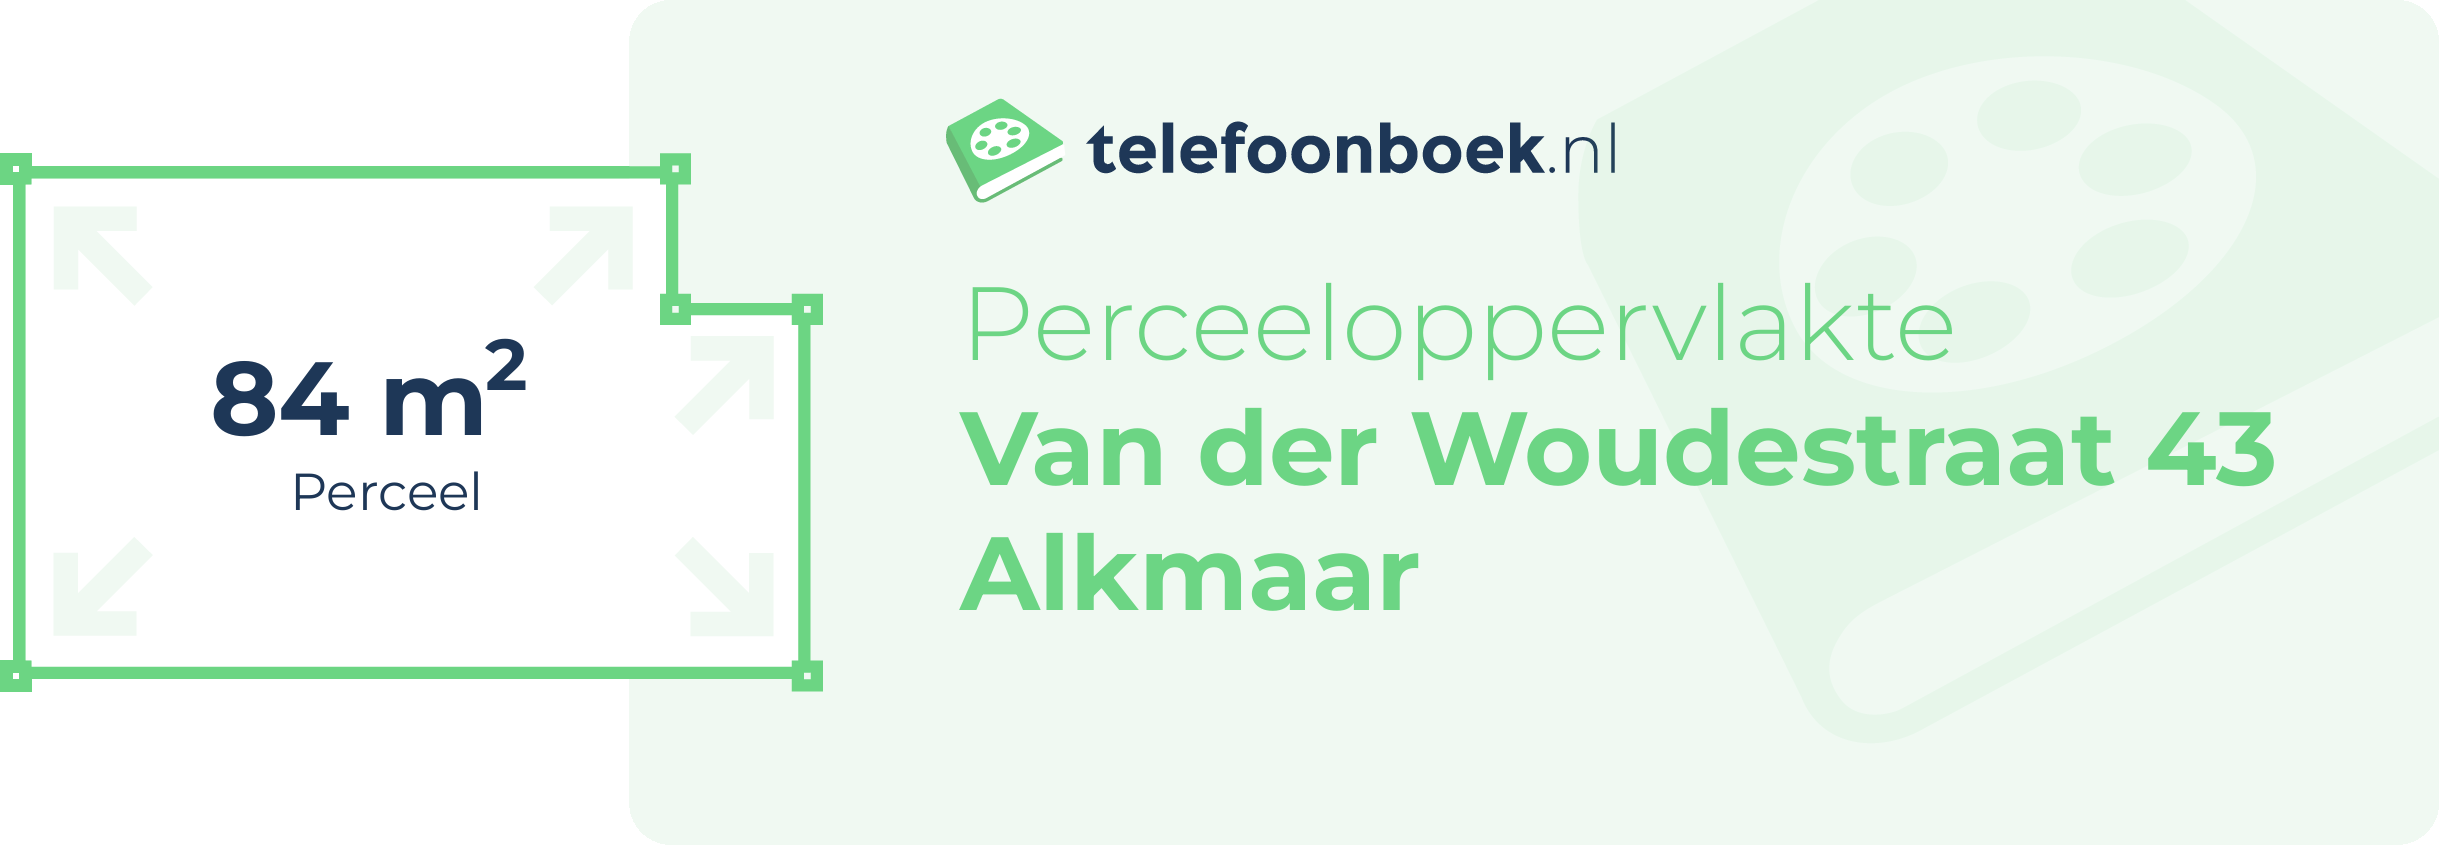 Perceeloppervlakte Van Der Woudestraat 43 Alkmaar